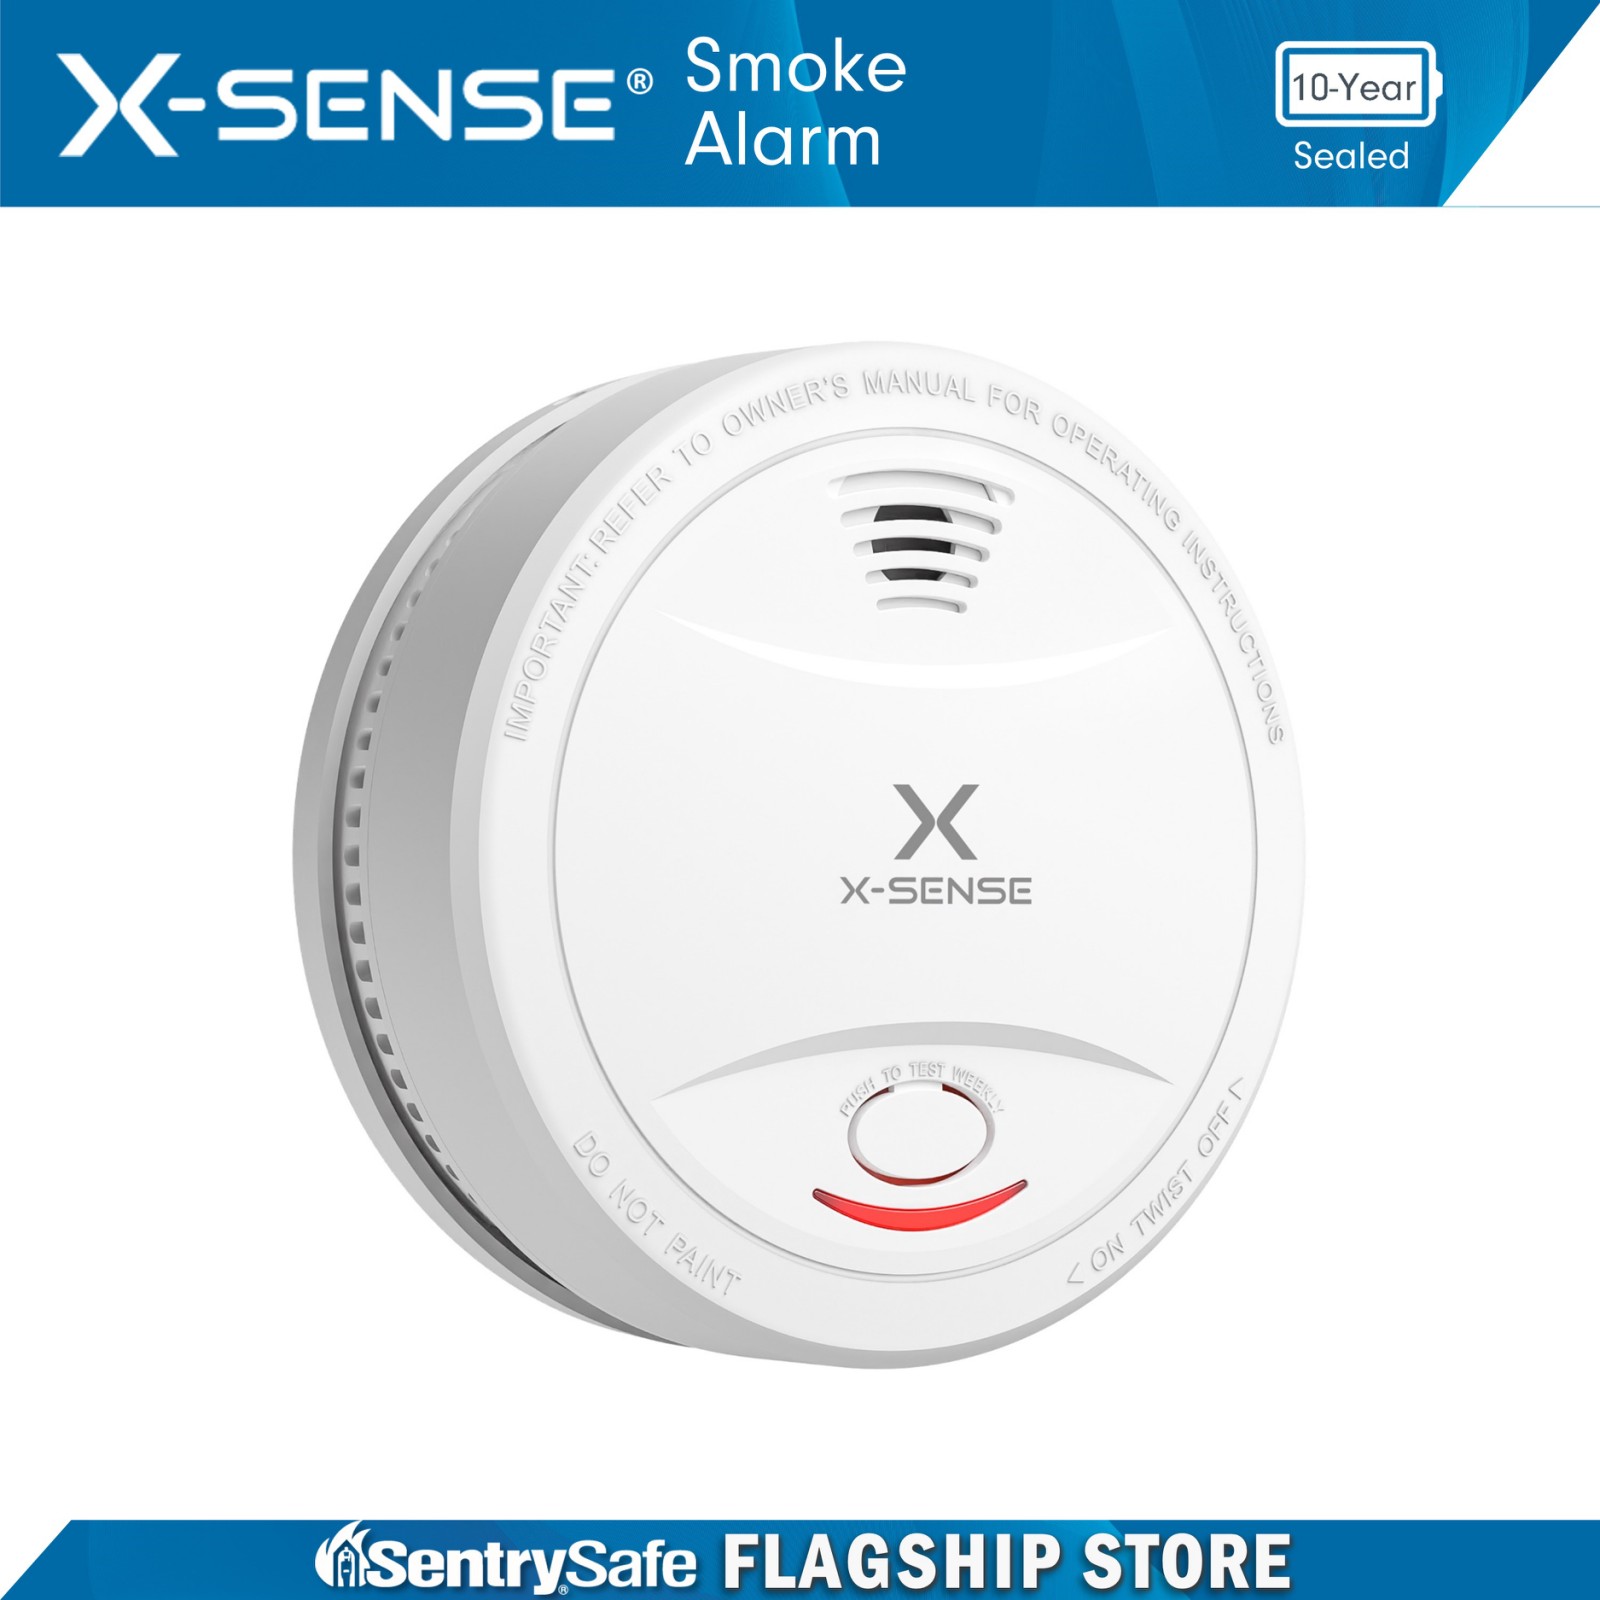 X-SENSE SD12 Smoke Alarm with 10-Year Battery